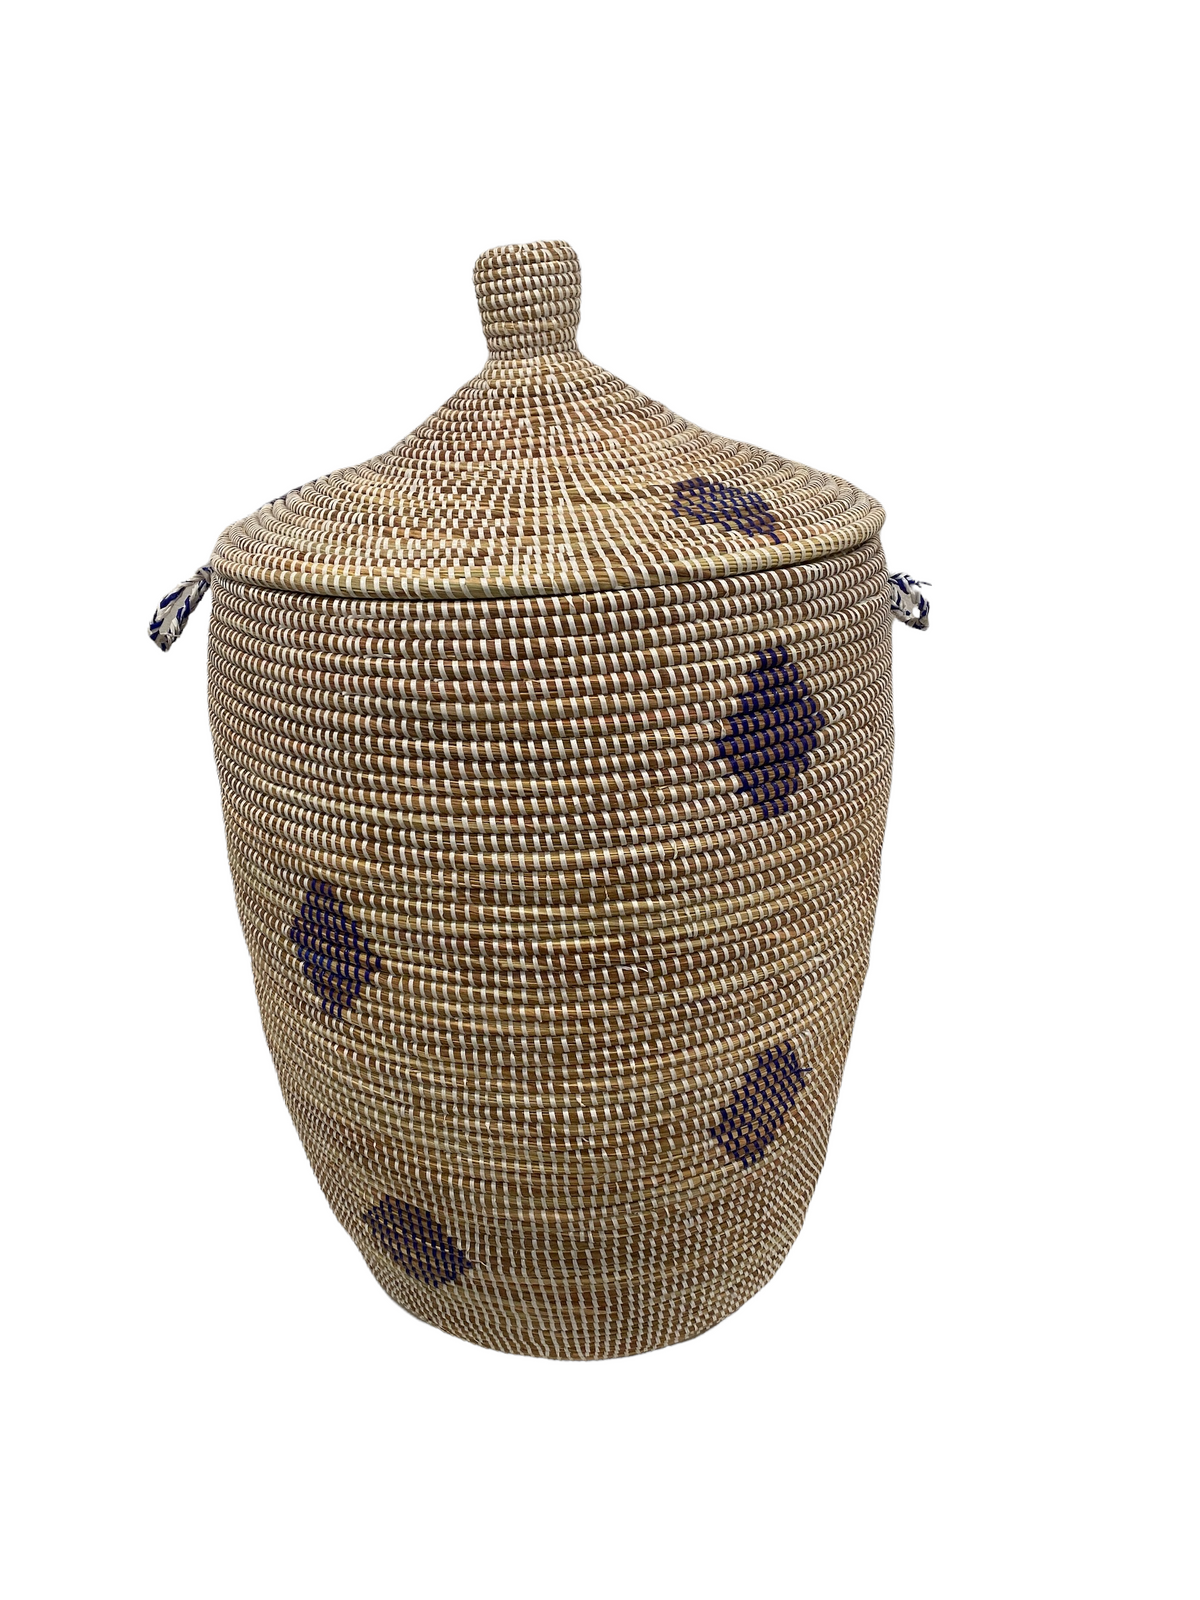 Senegal Laundry Basket - (88A.3